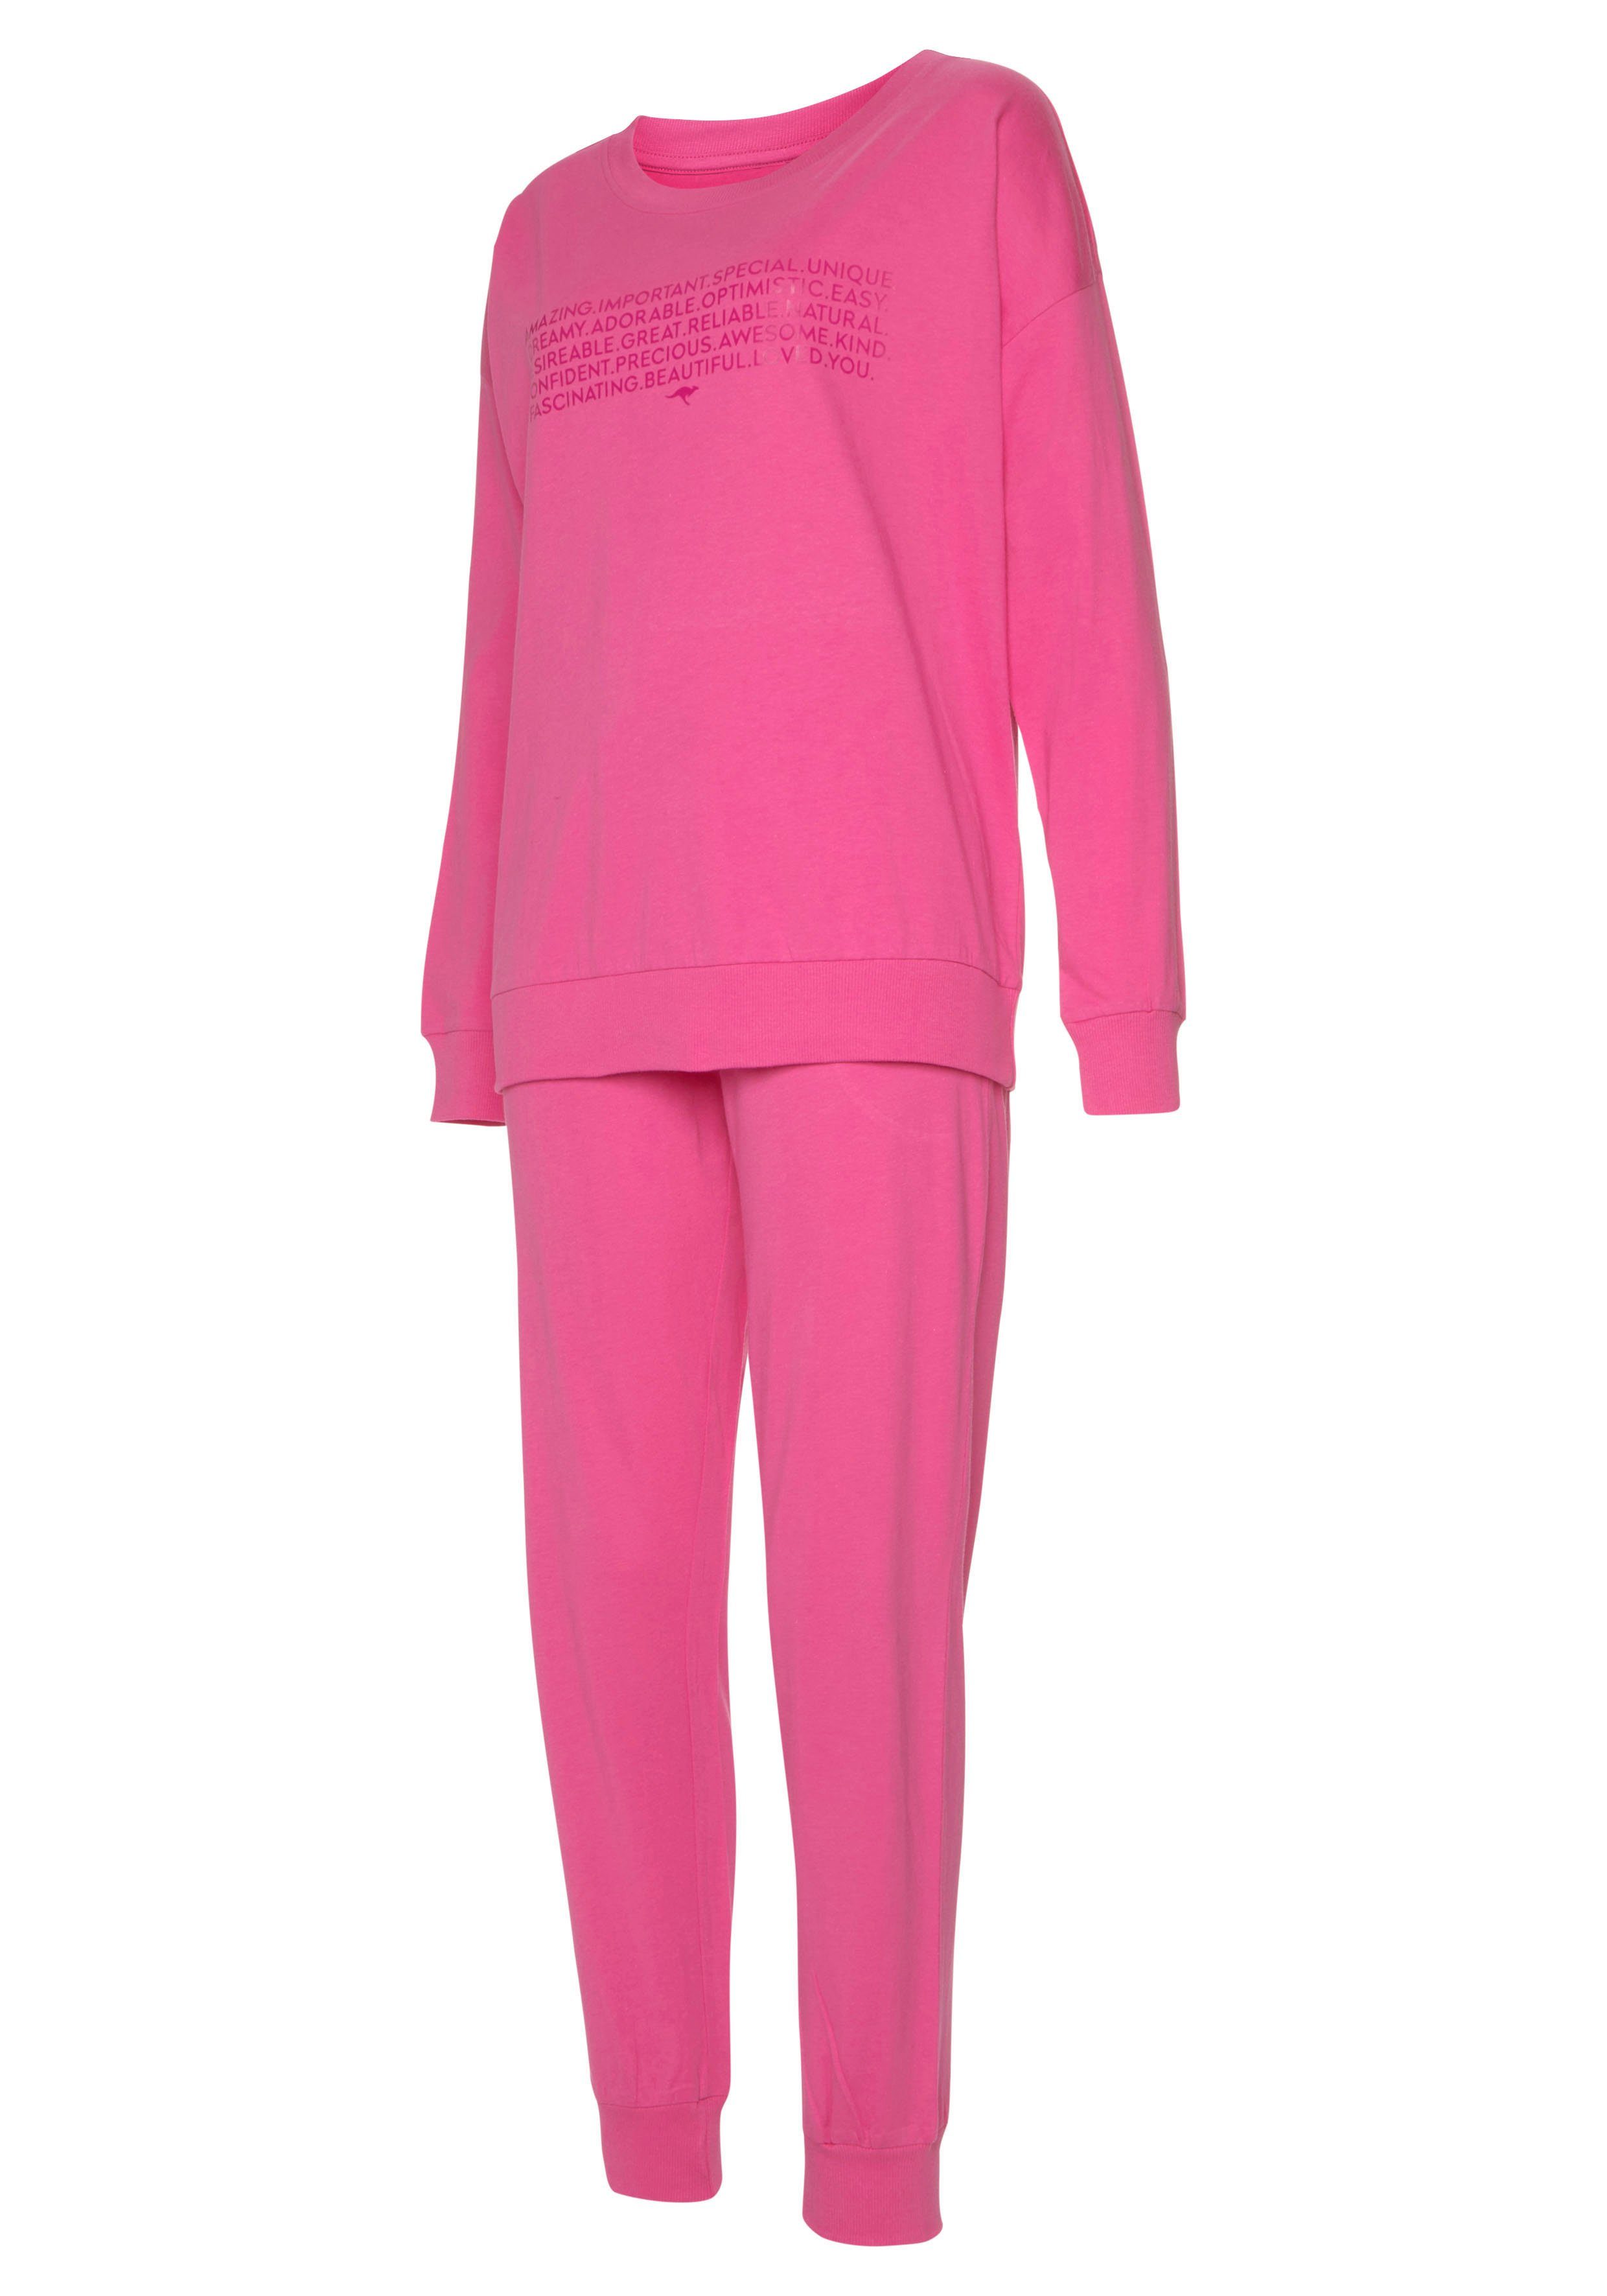 KangaROOS Pyjama Slogan-Frontdruck (2 Stück) tlg., 1 pink mit